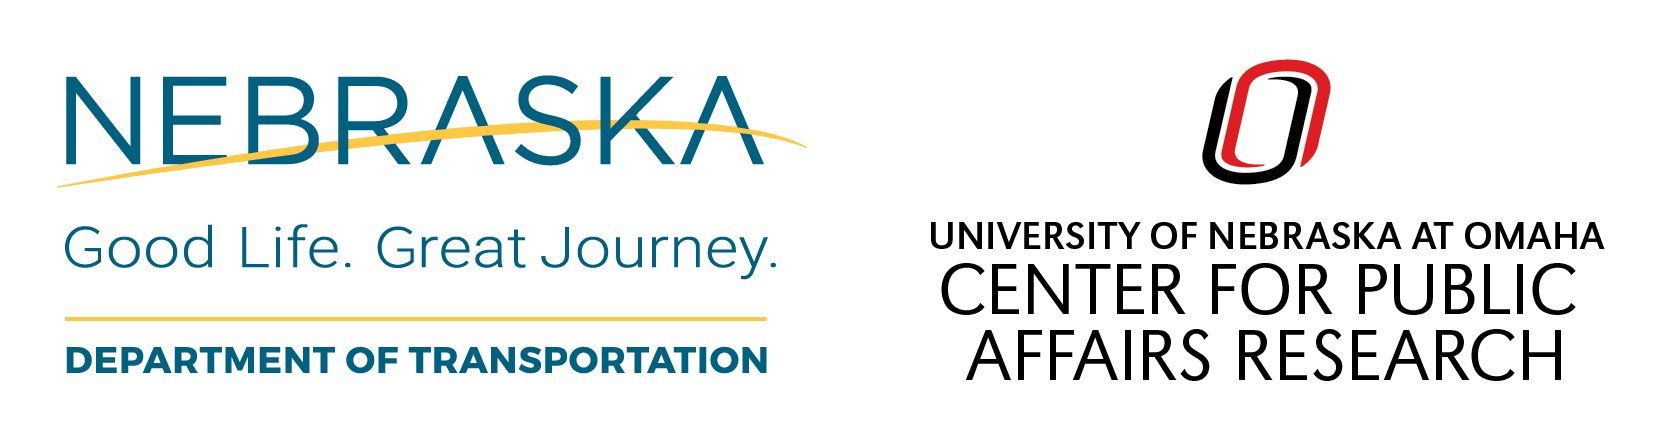 Nebraska Department of Transportation and University of Nebraska at Omaha Center for Public Affairs Research logos